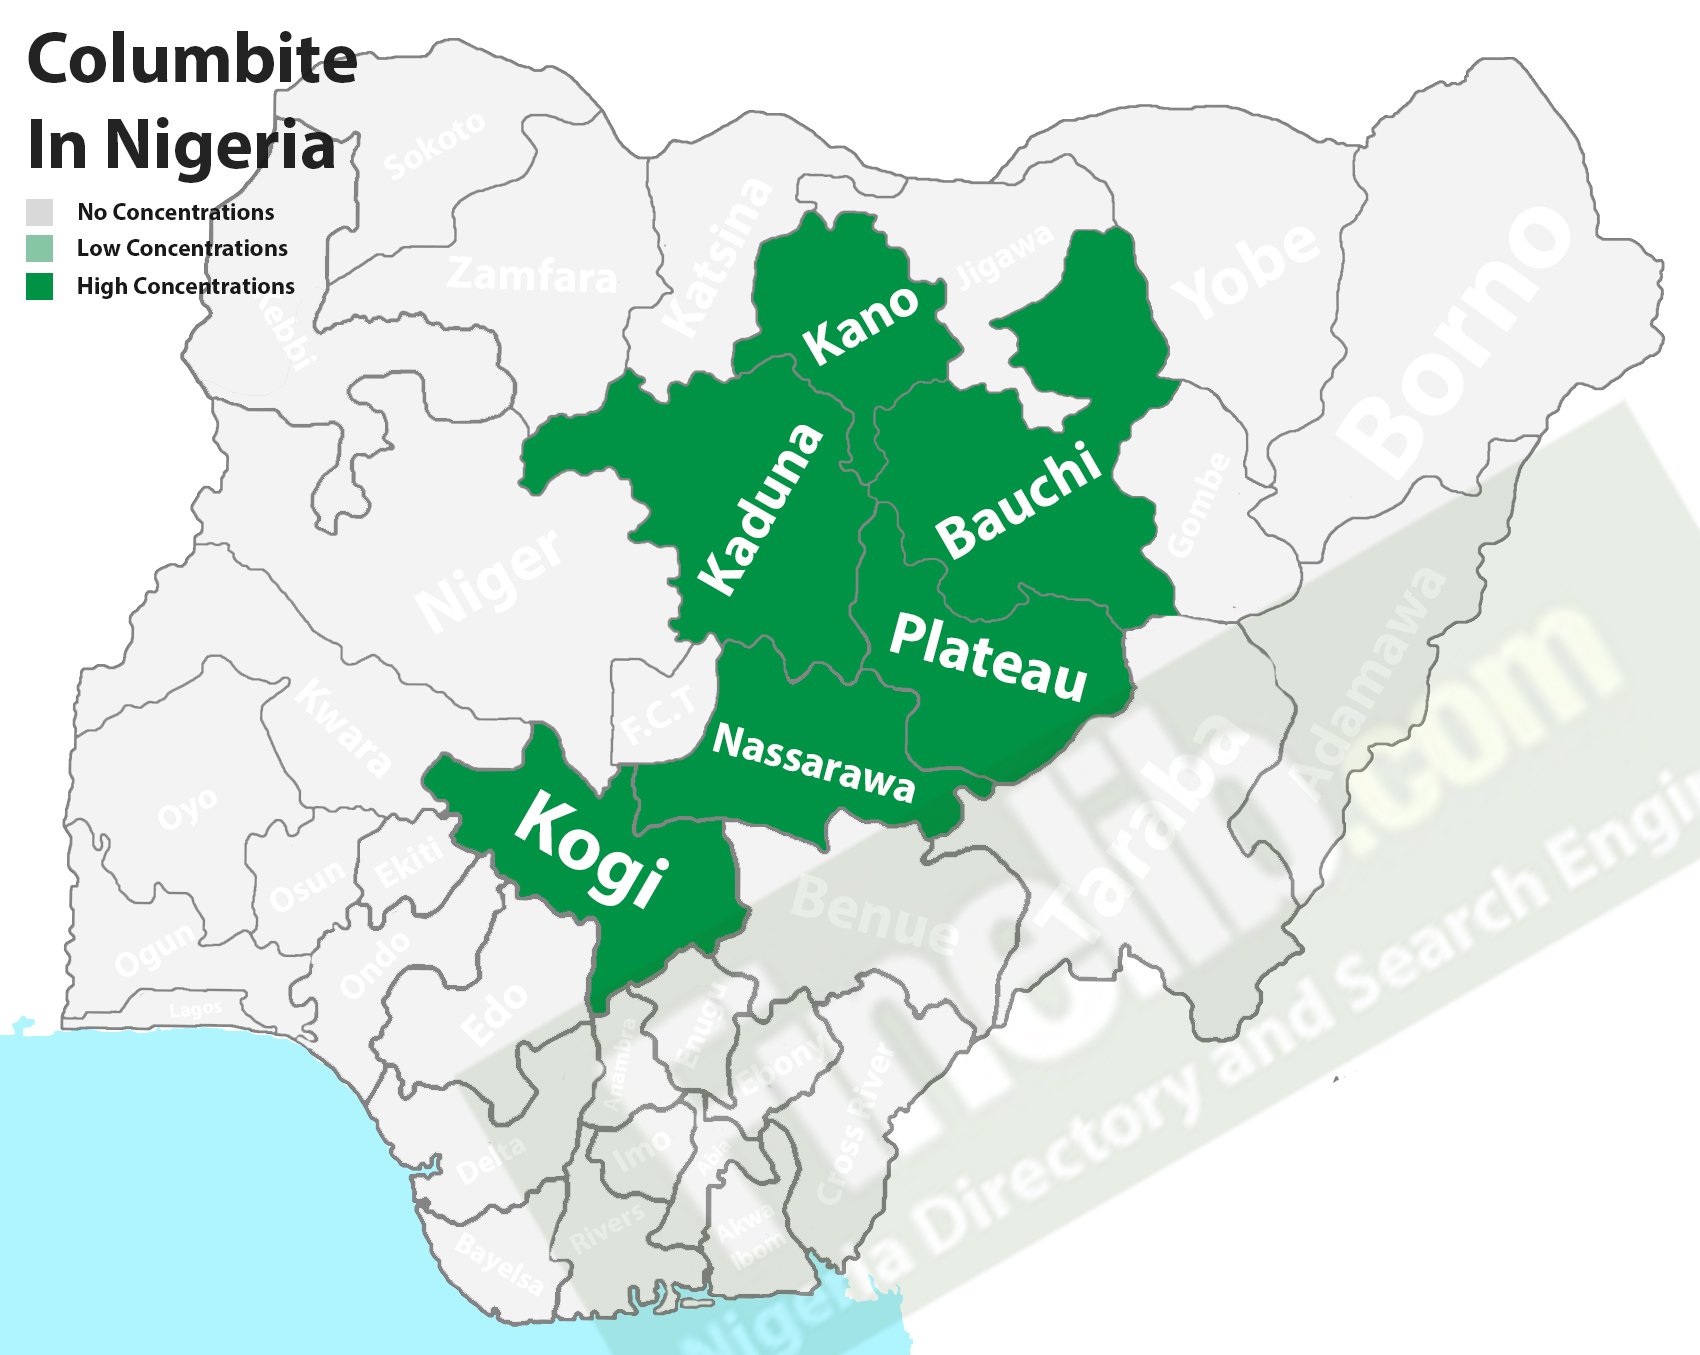 Columbite natural mineral deposits in Nigeria